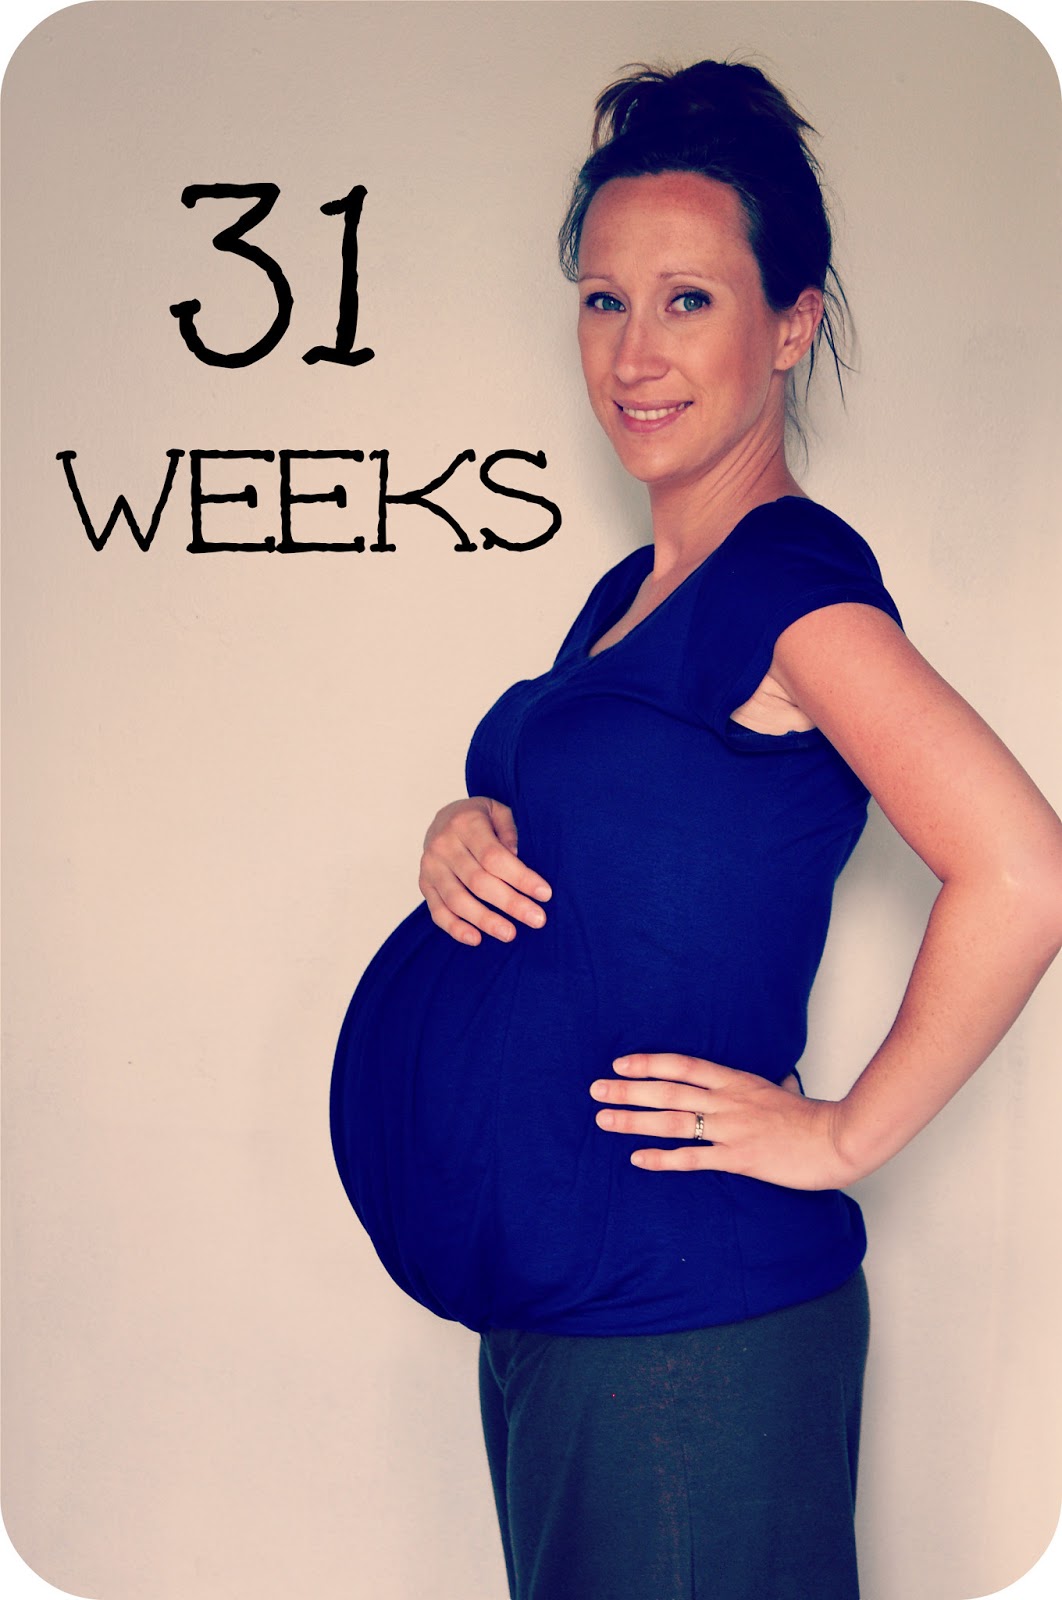 31 Weeks Pregnant Is Baby Brain Development